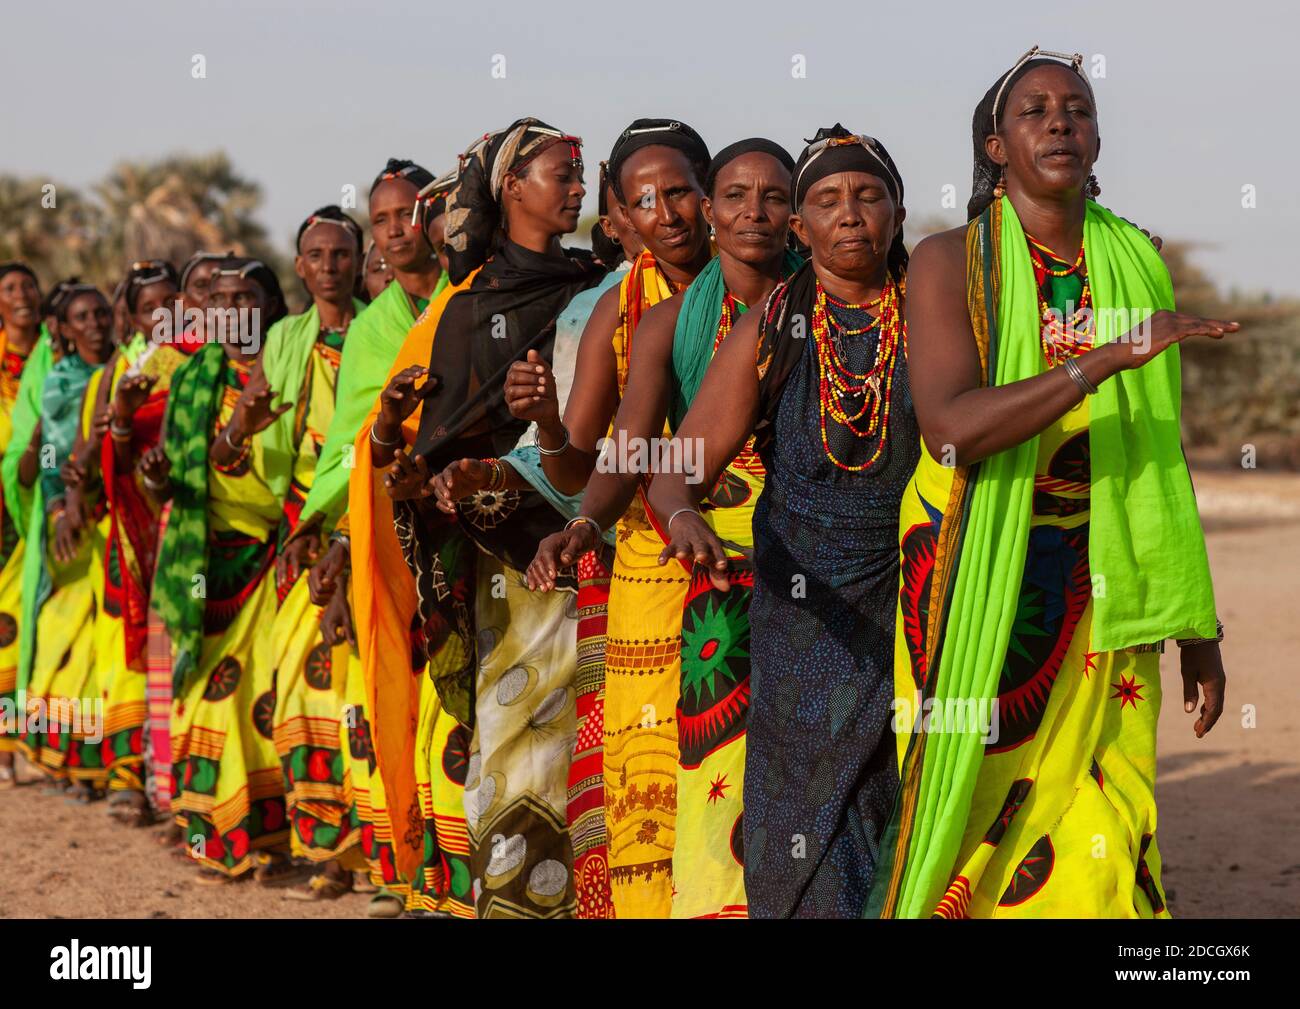 Gabra tribe women dancing in line, Marsabit County, Chalbi Desert, Kenya  Stock Photo - Alamy